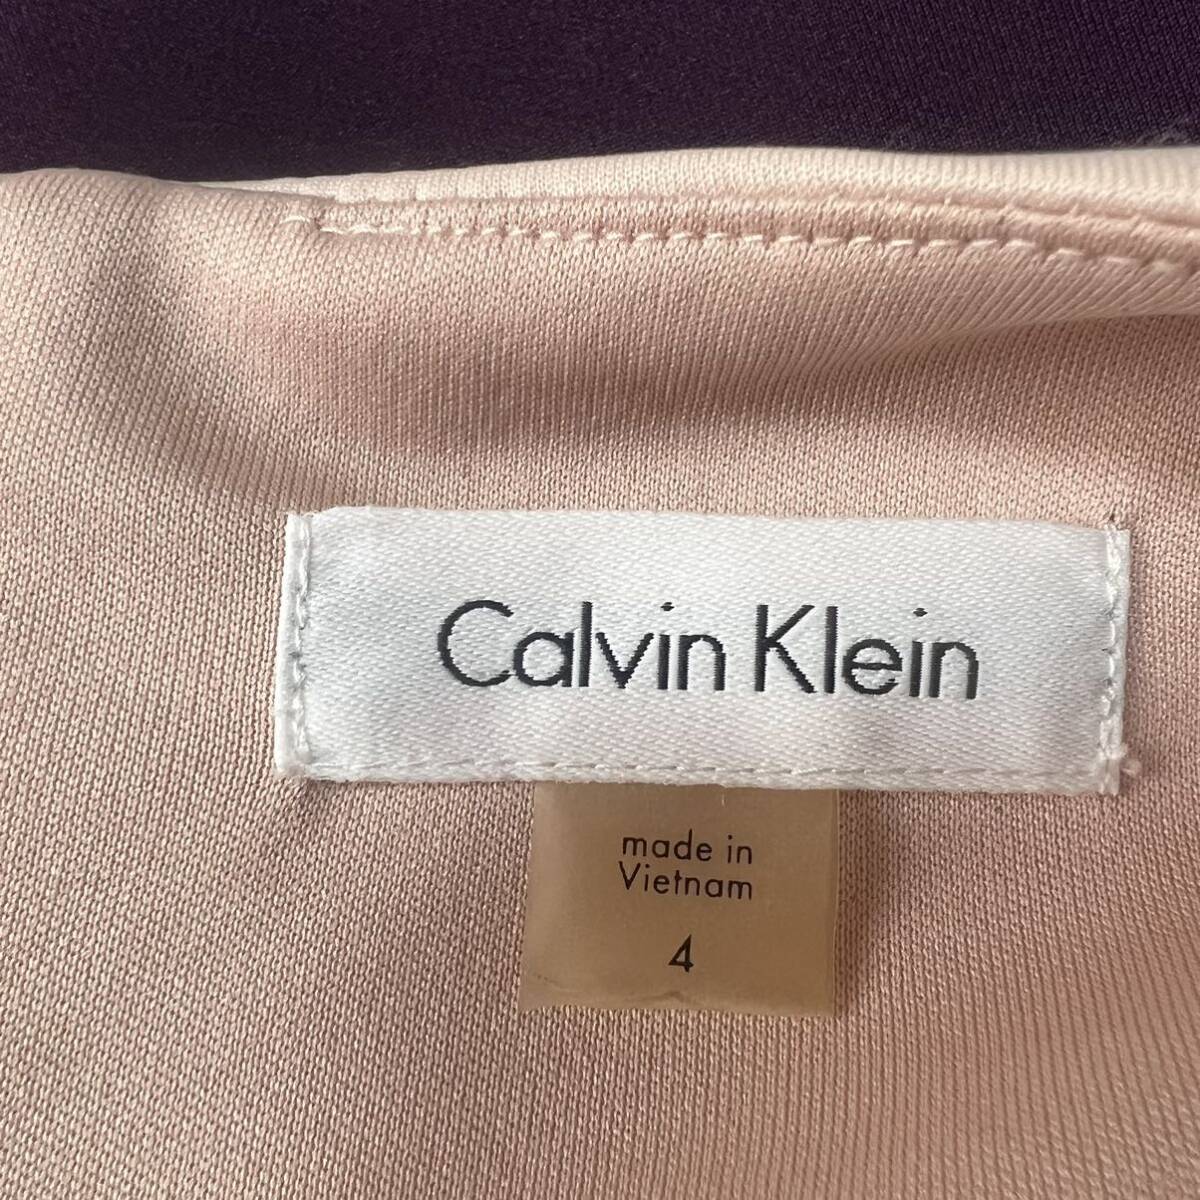 Calvin Klein カルバンクライン ワンピース ノースリーブ ワンピースドレス サイズ4 ひざ丈_画像9